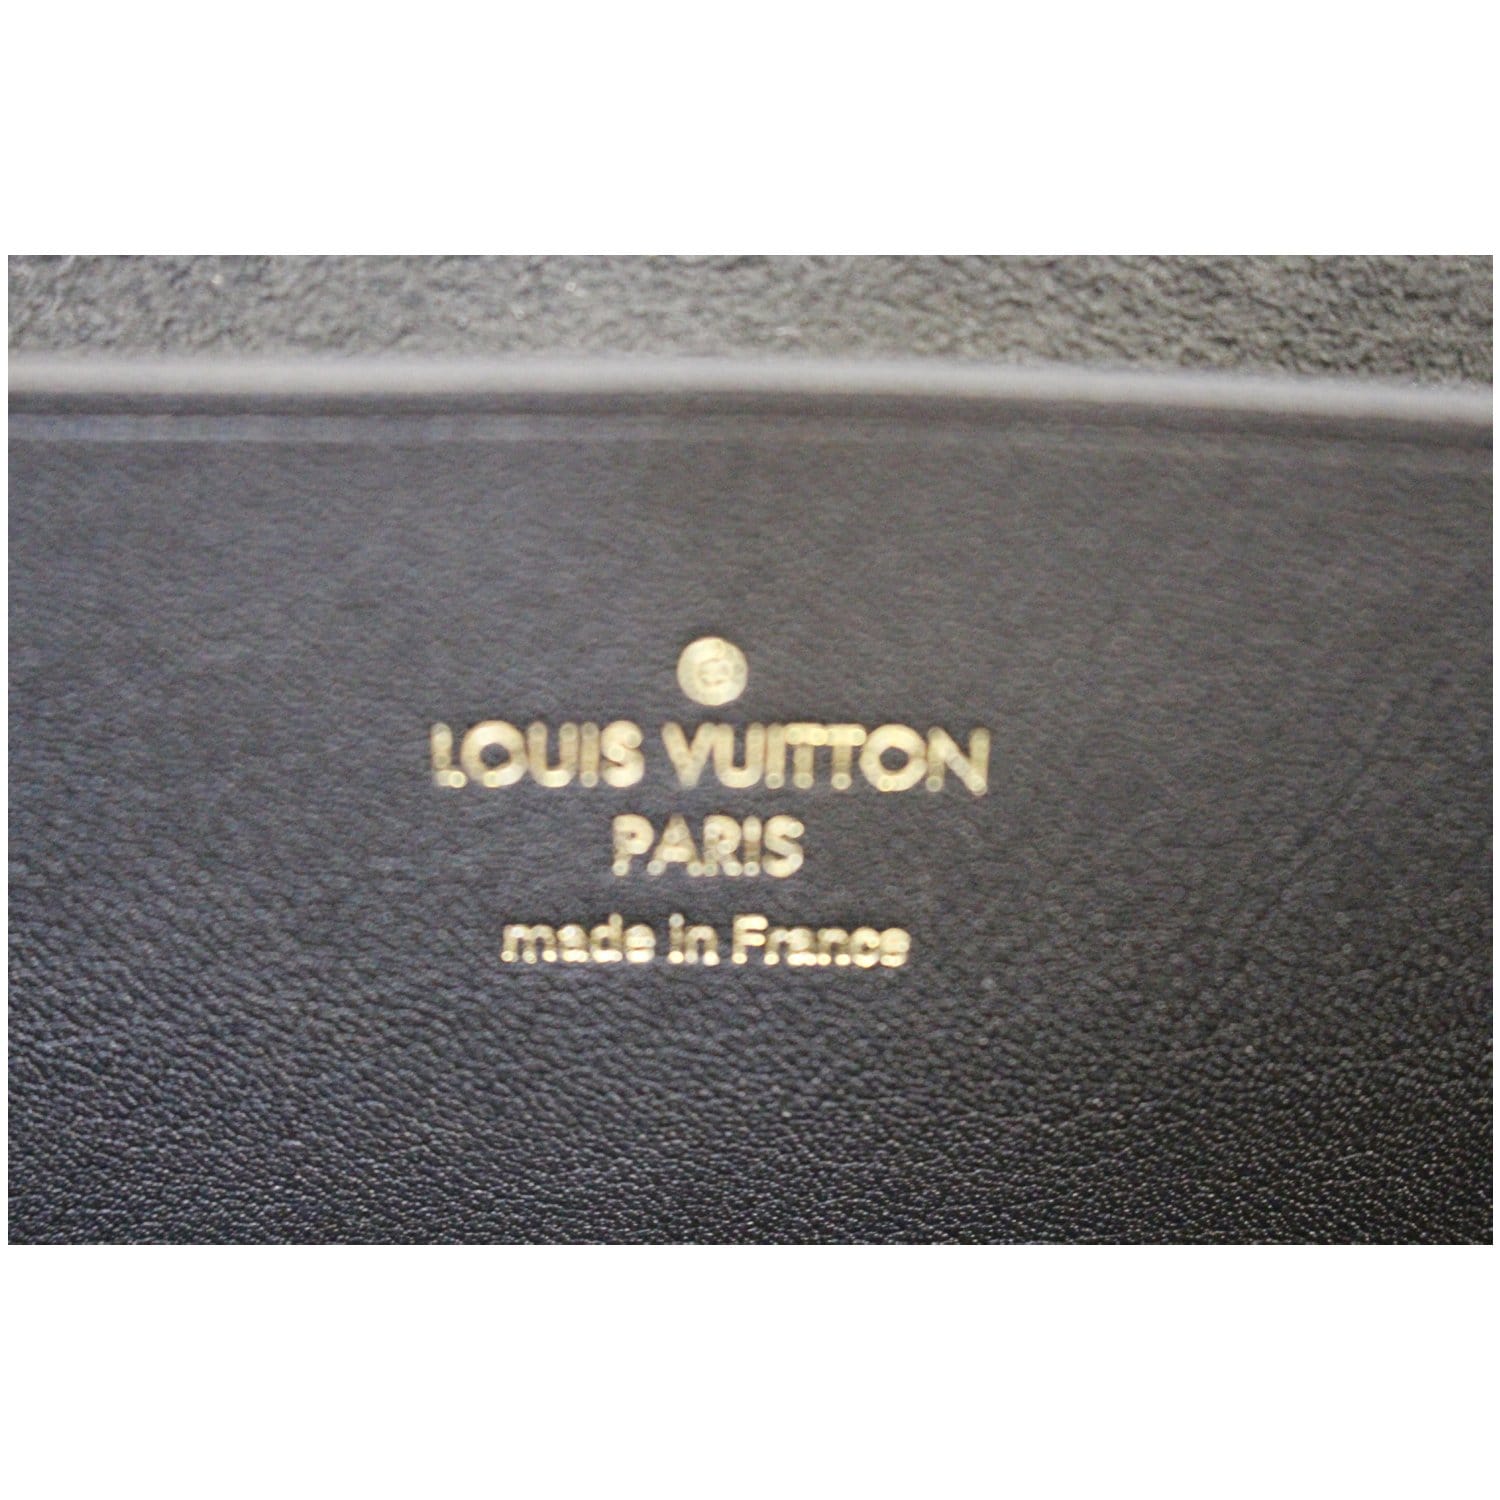 Louis Vuitton Love Note Review